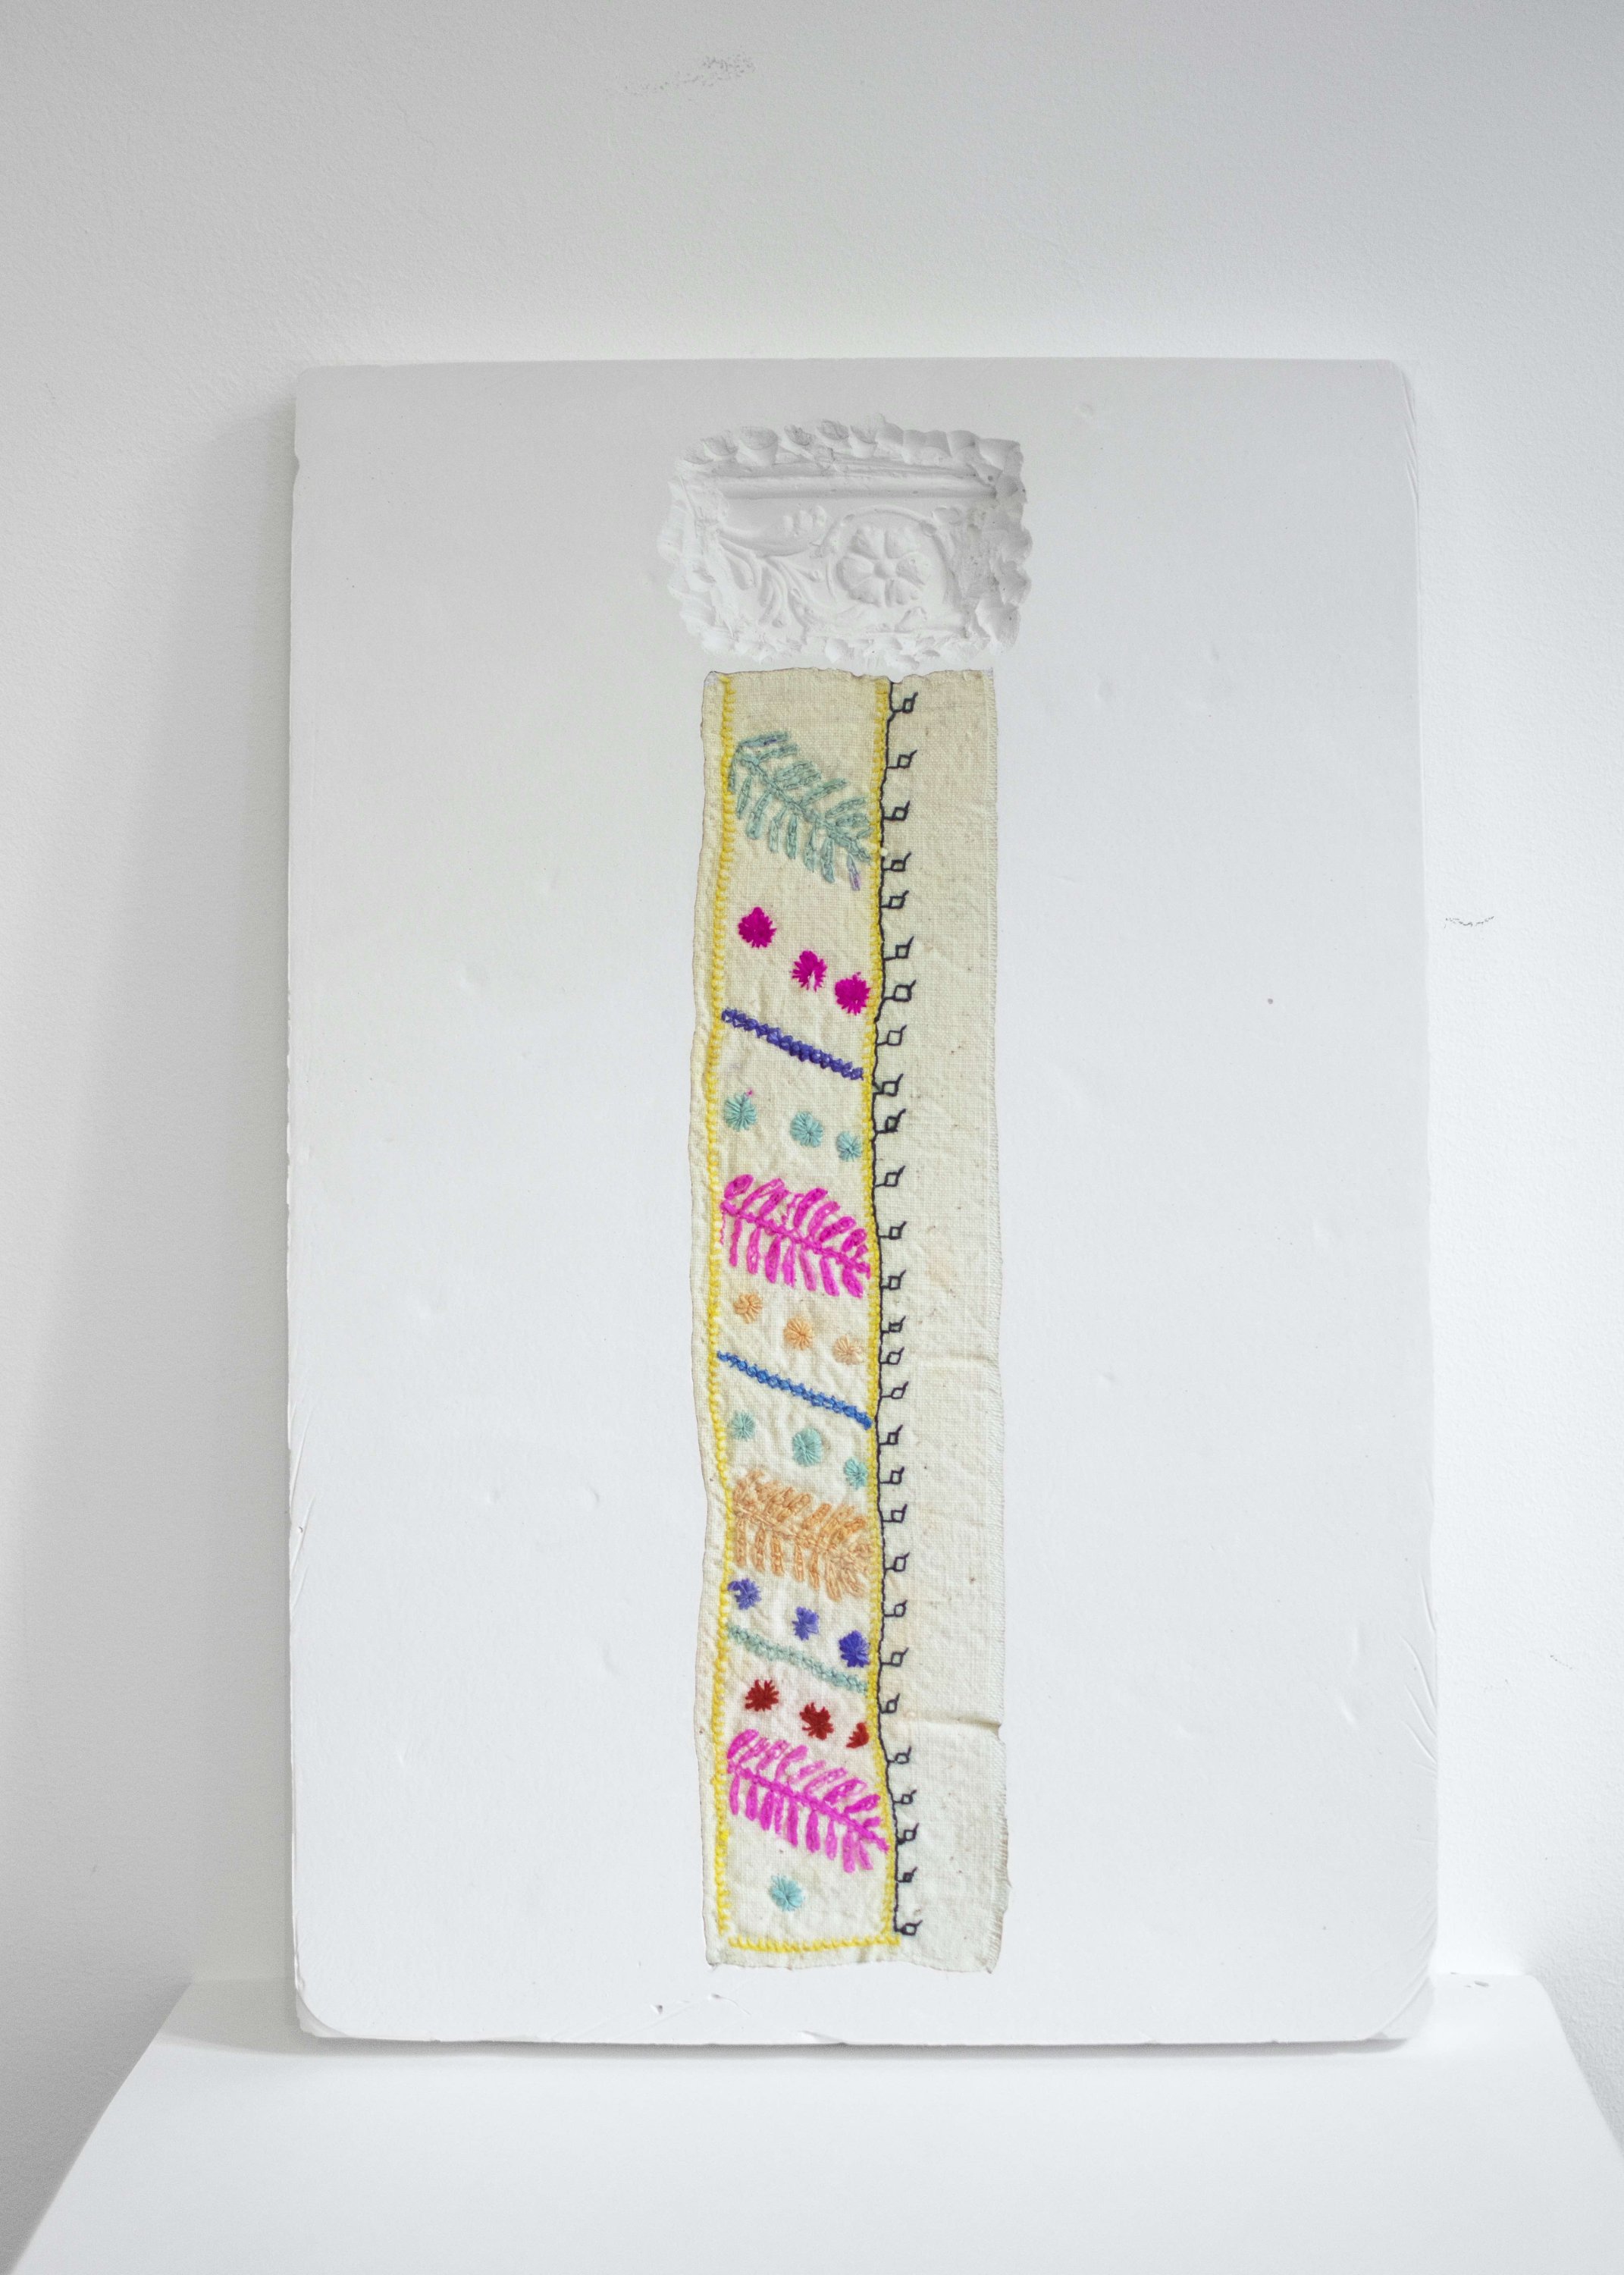 Ekin Su Koç, "Altbau V," fabric, lace and plaster, 30 by 35 centimeters, 2020. (Courtesy of Anna Laudel)